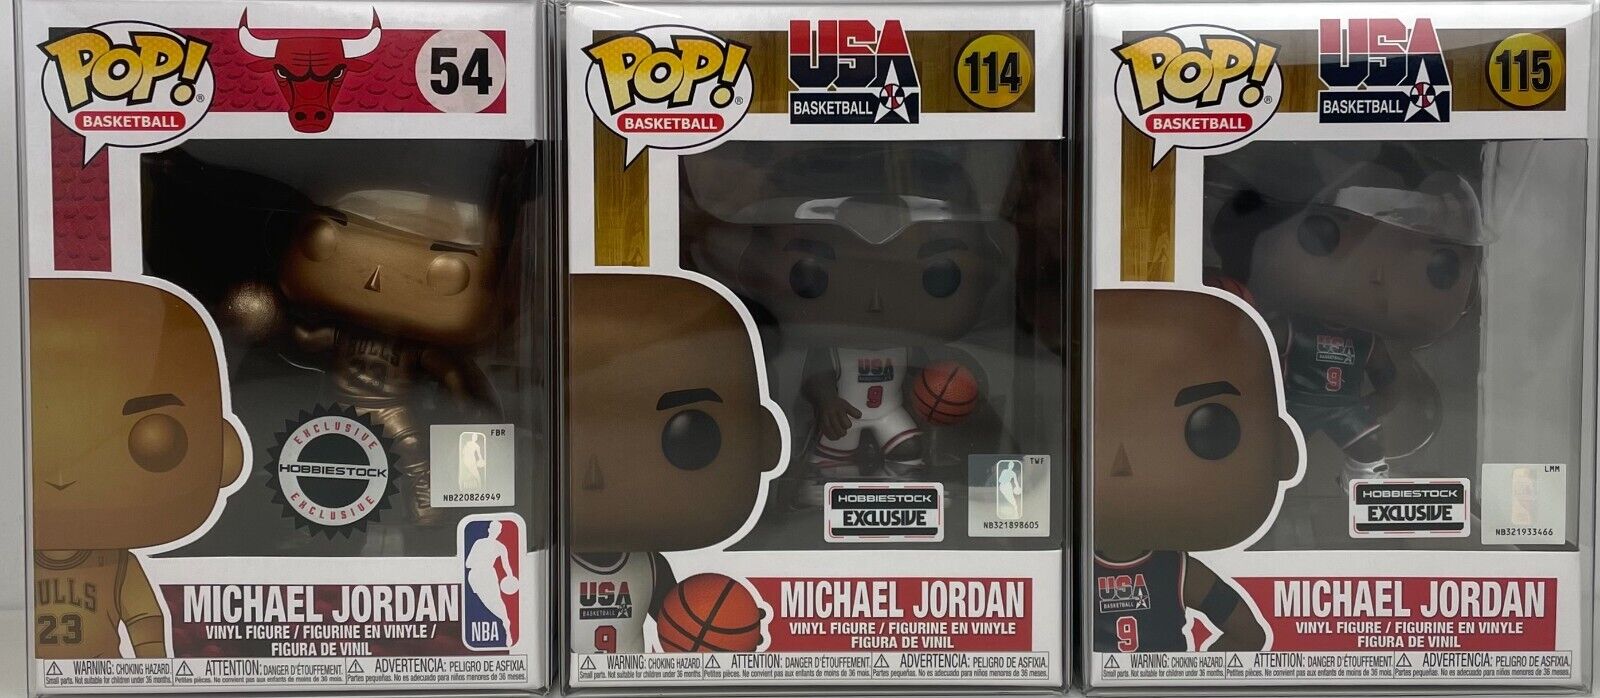 Funko Pop Michael Jordan Exclusives Set of 3 #54 #114 & #115 In Protectors